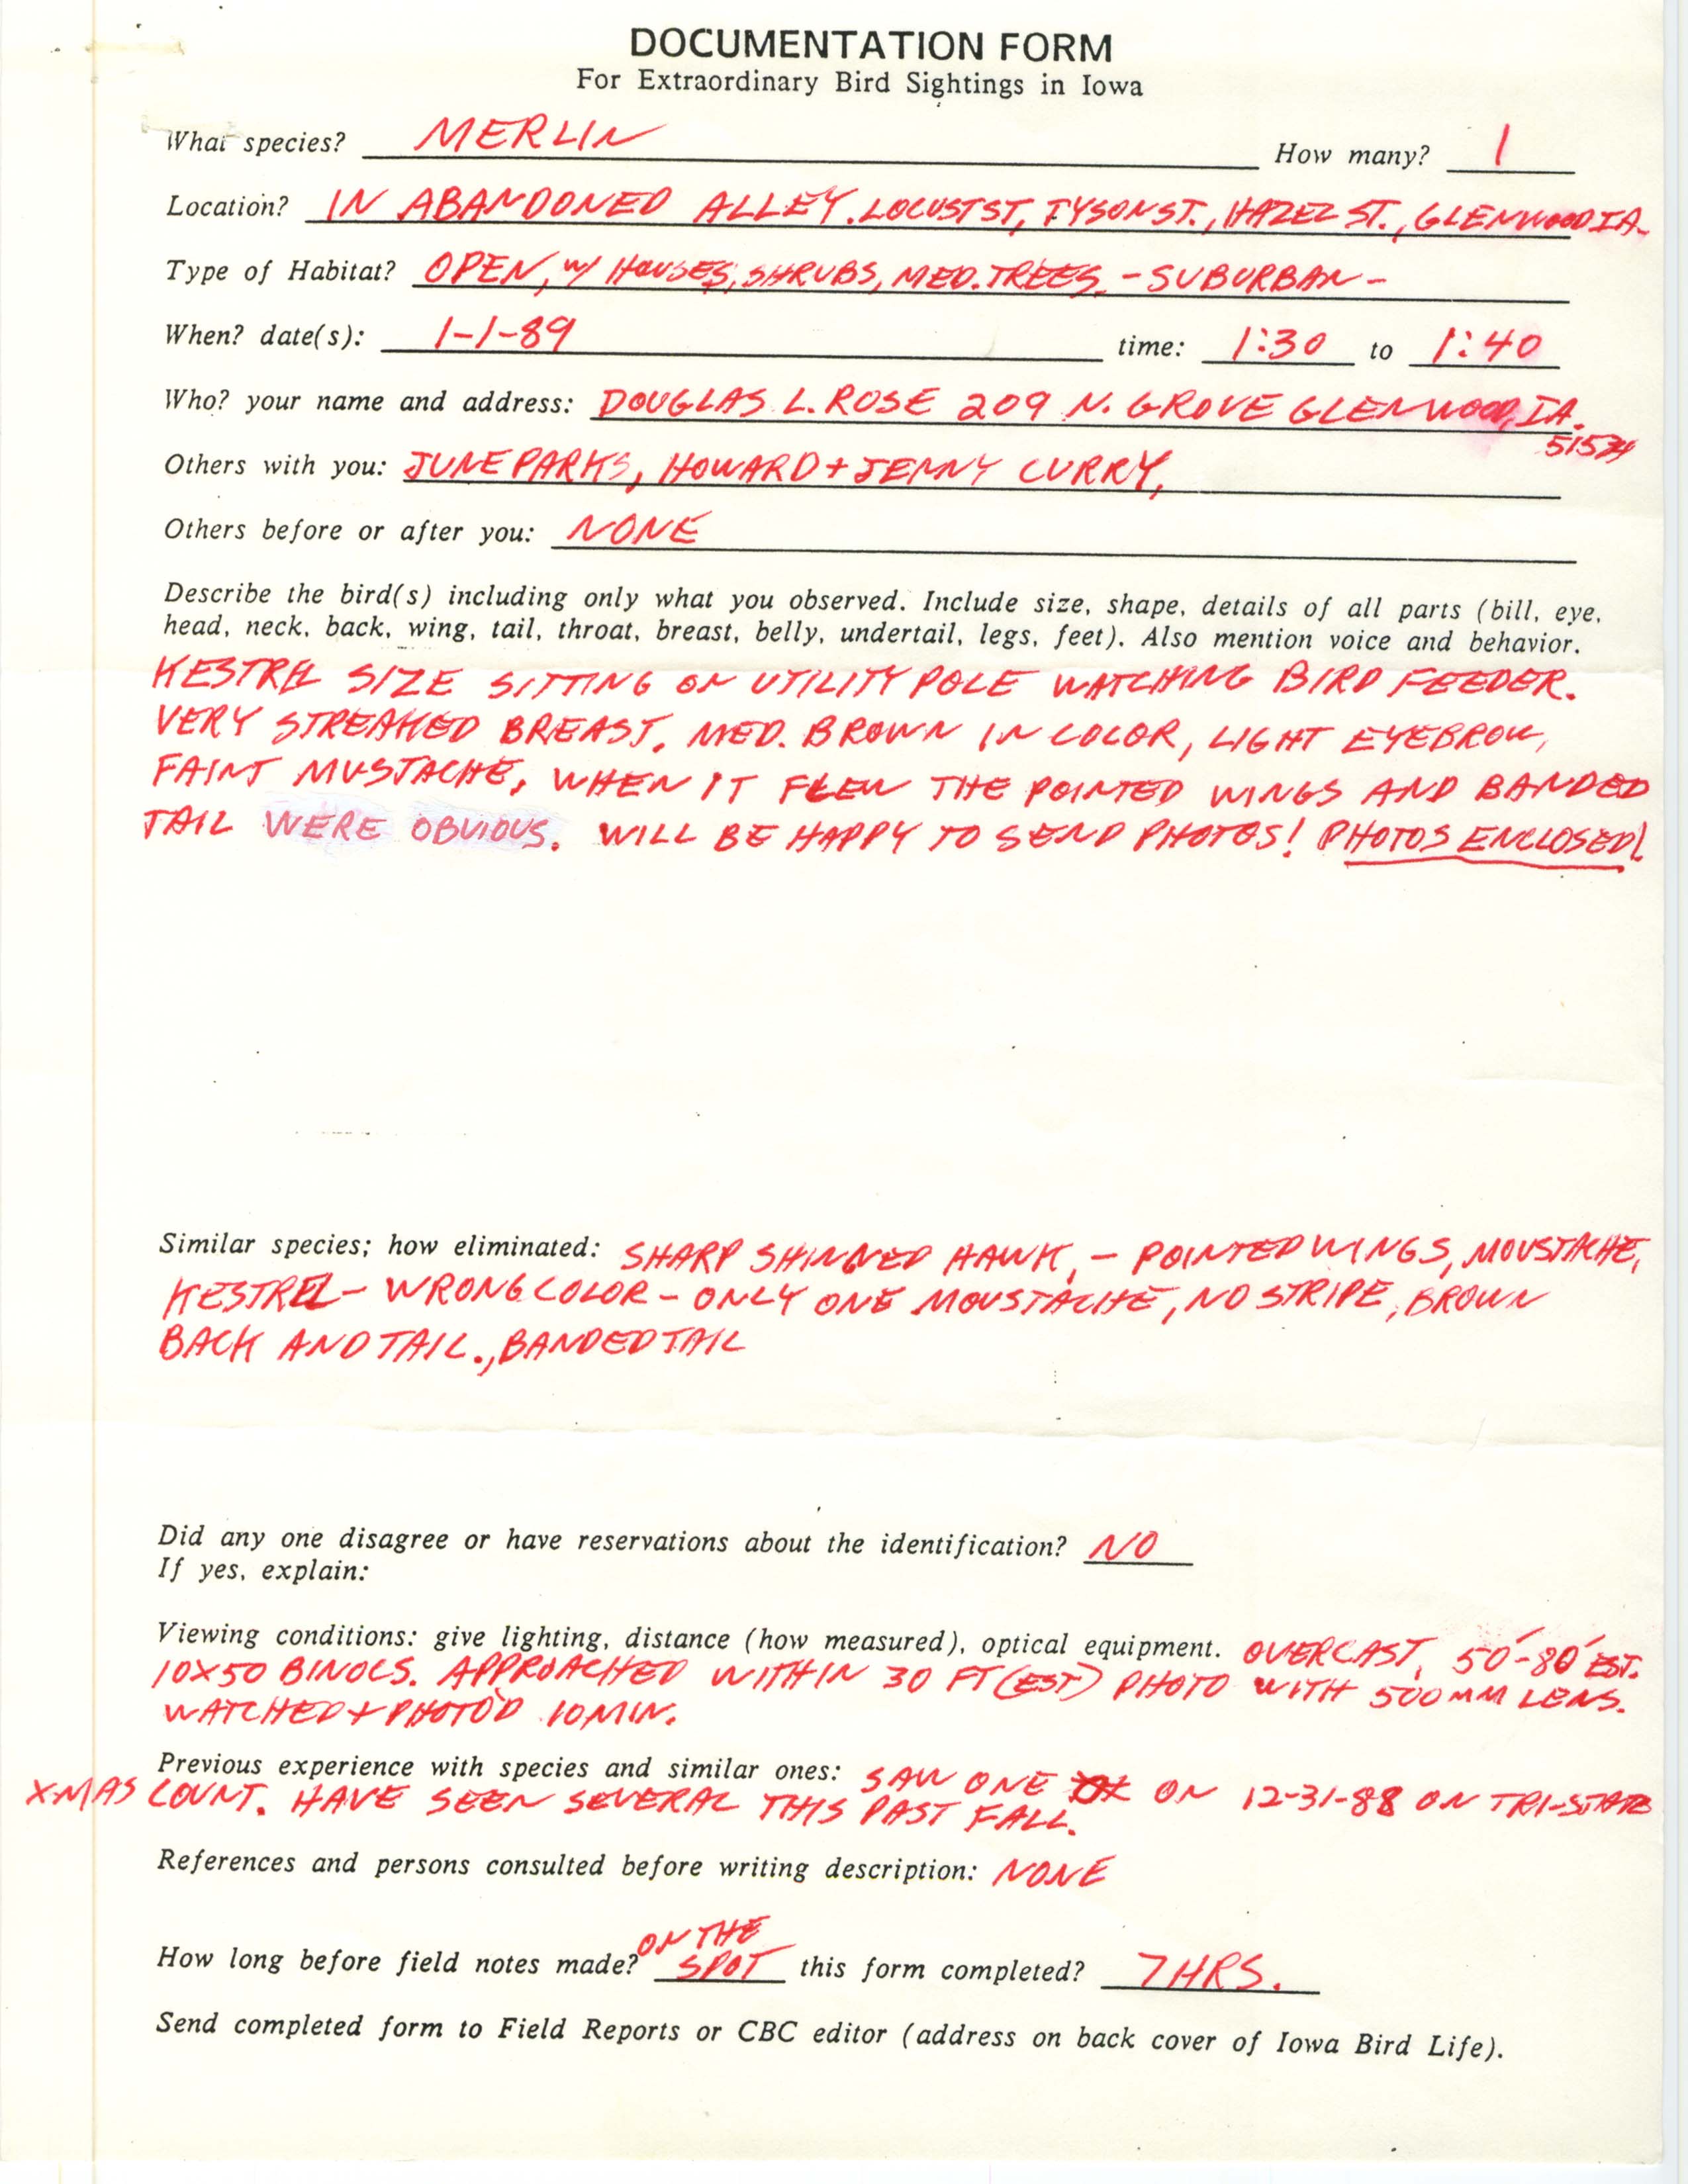 Rare bird documentation form for Merlin at Glenwood, 1989